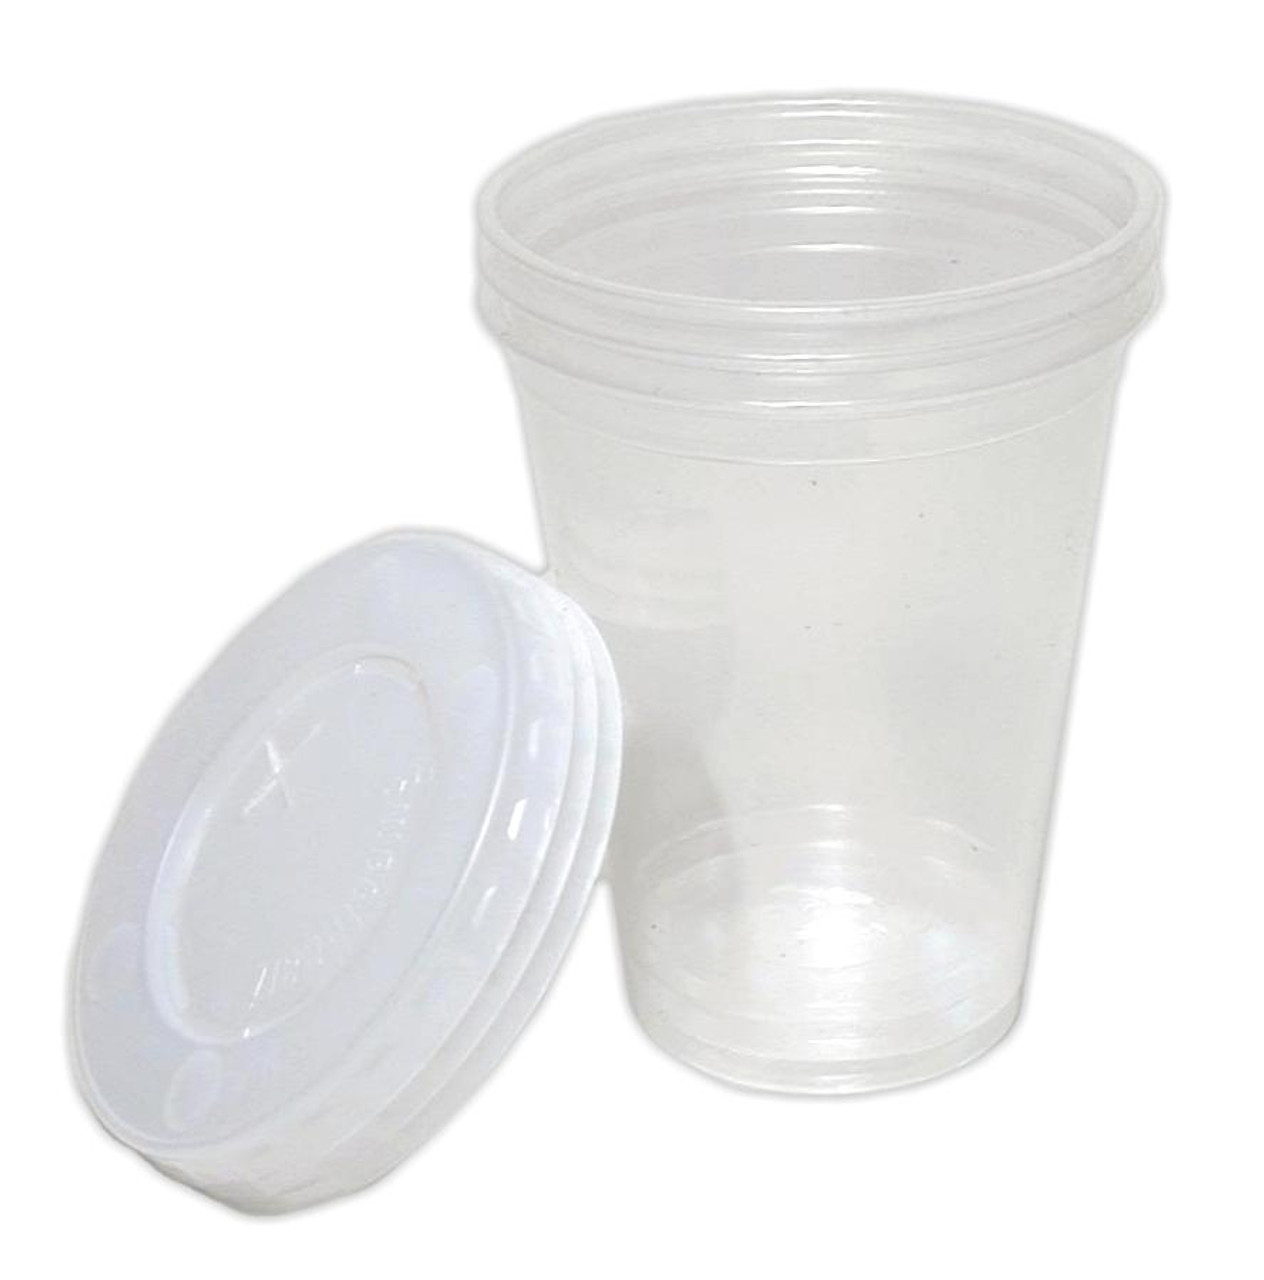 Cups & lids, 8 oz. plastic, 3/pack